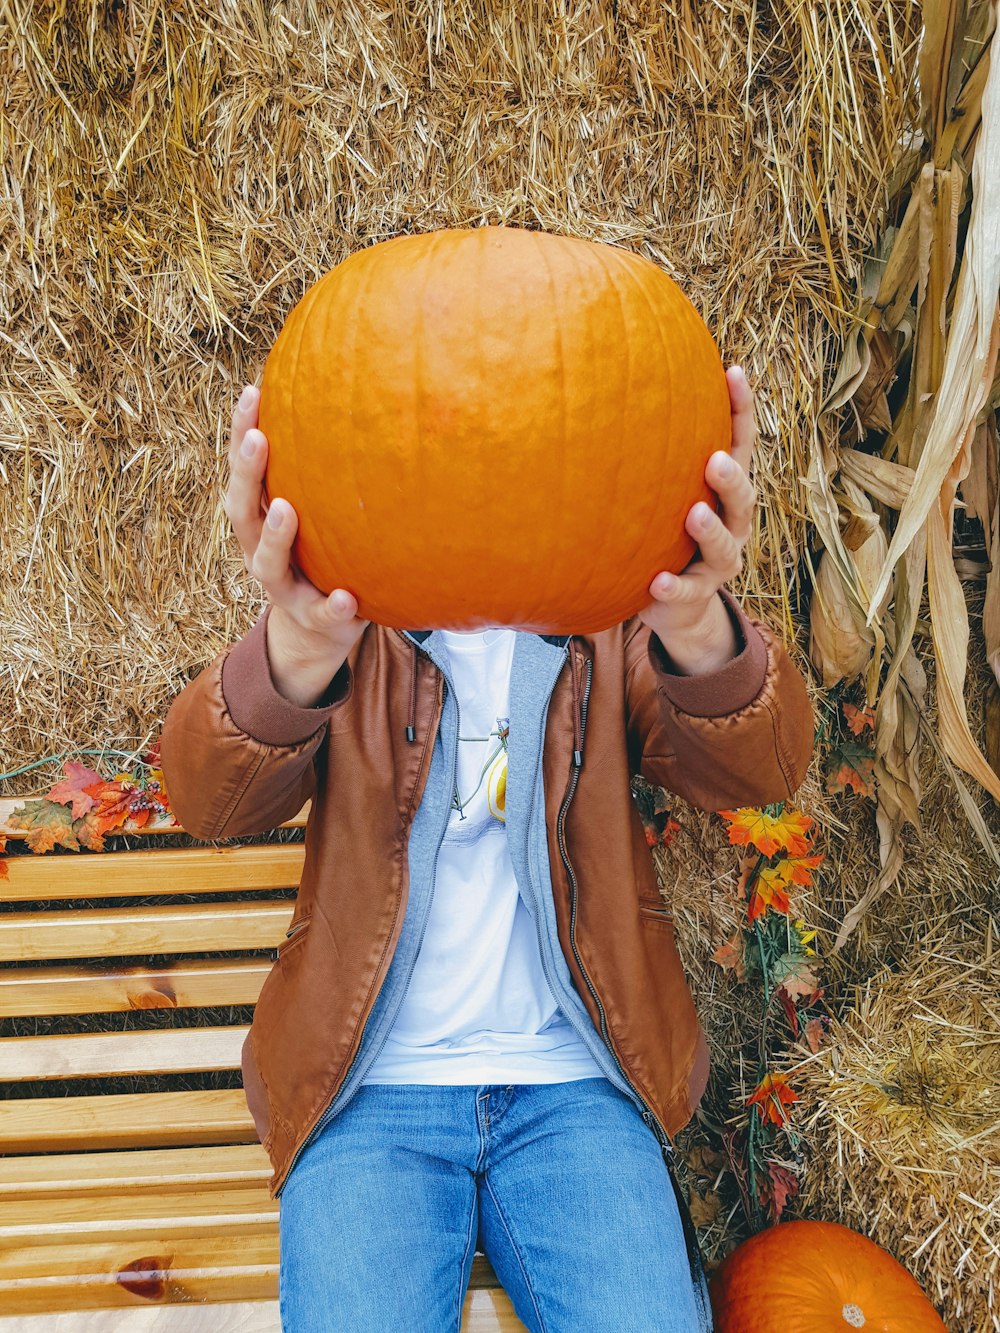 person holding pumpkin